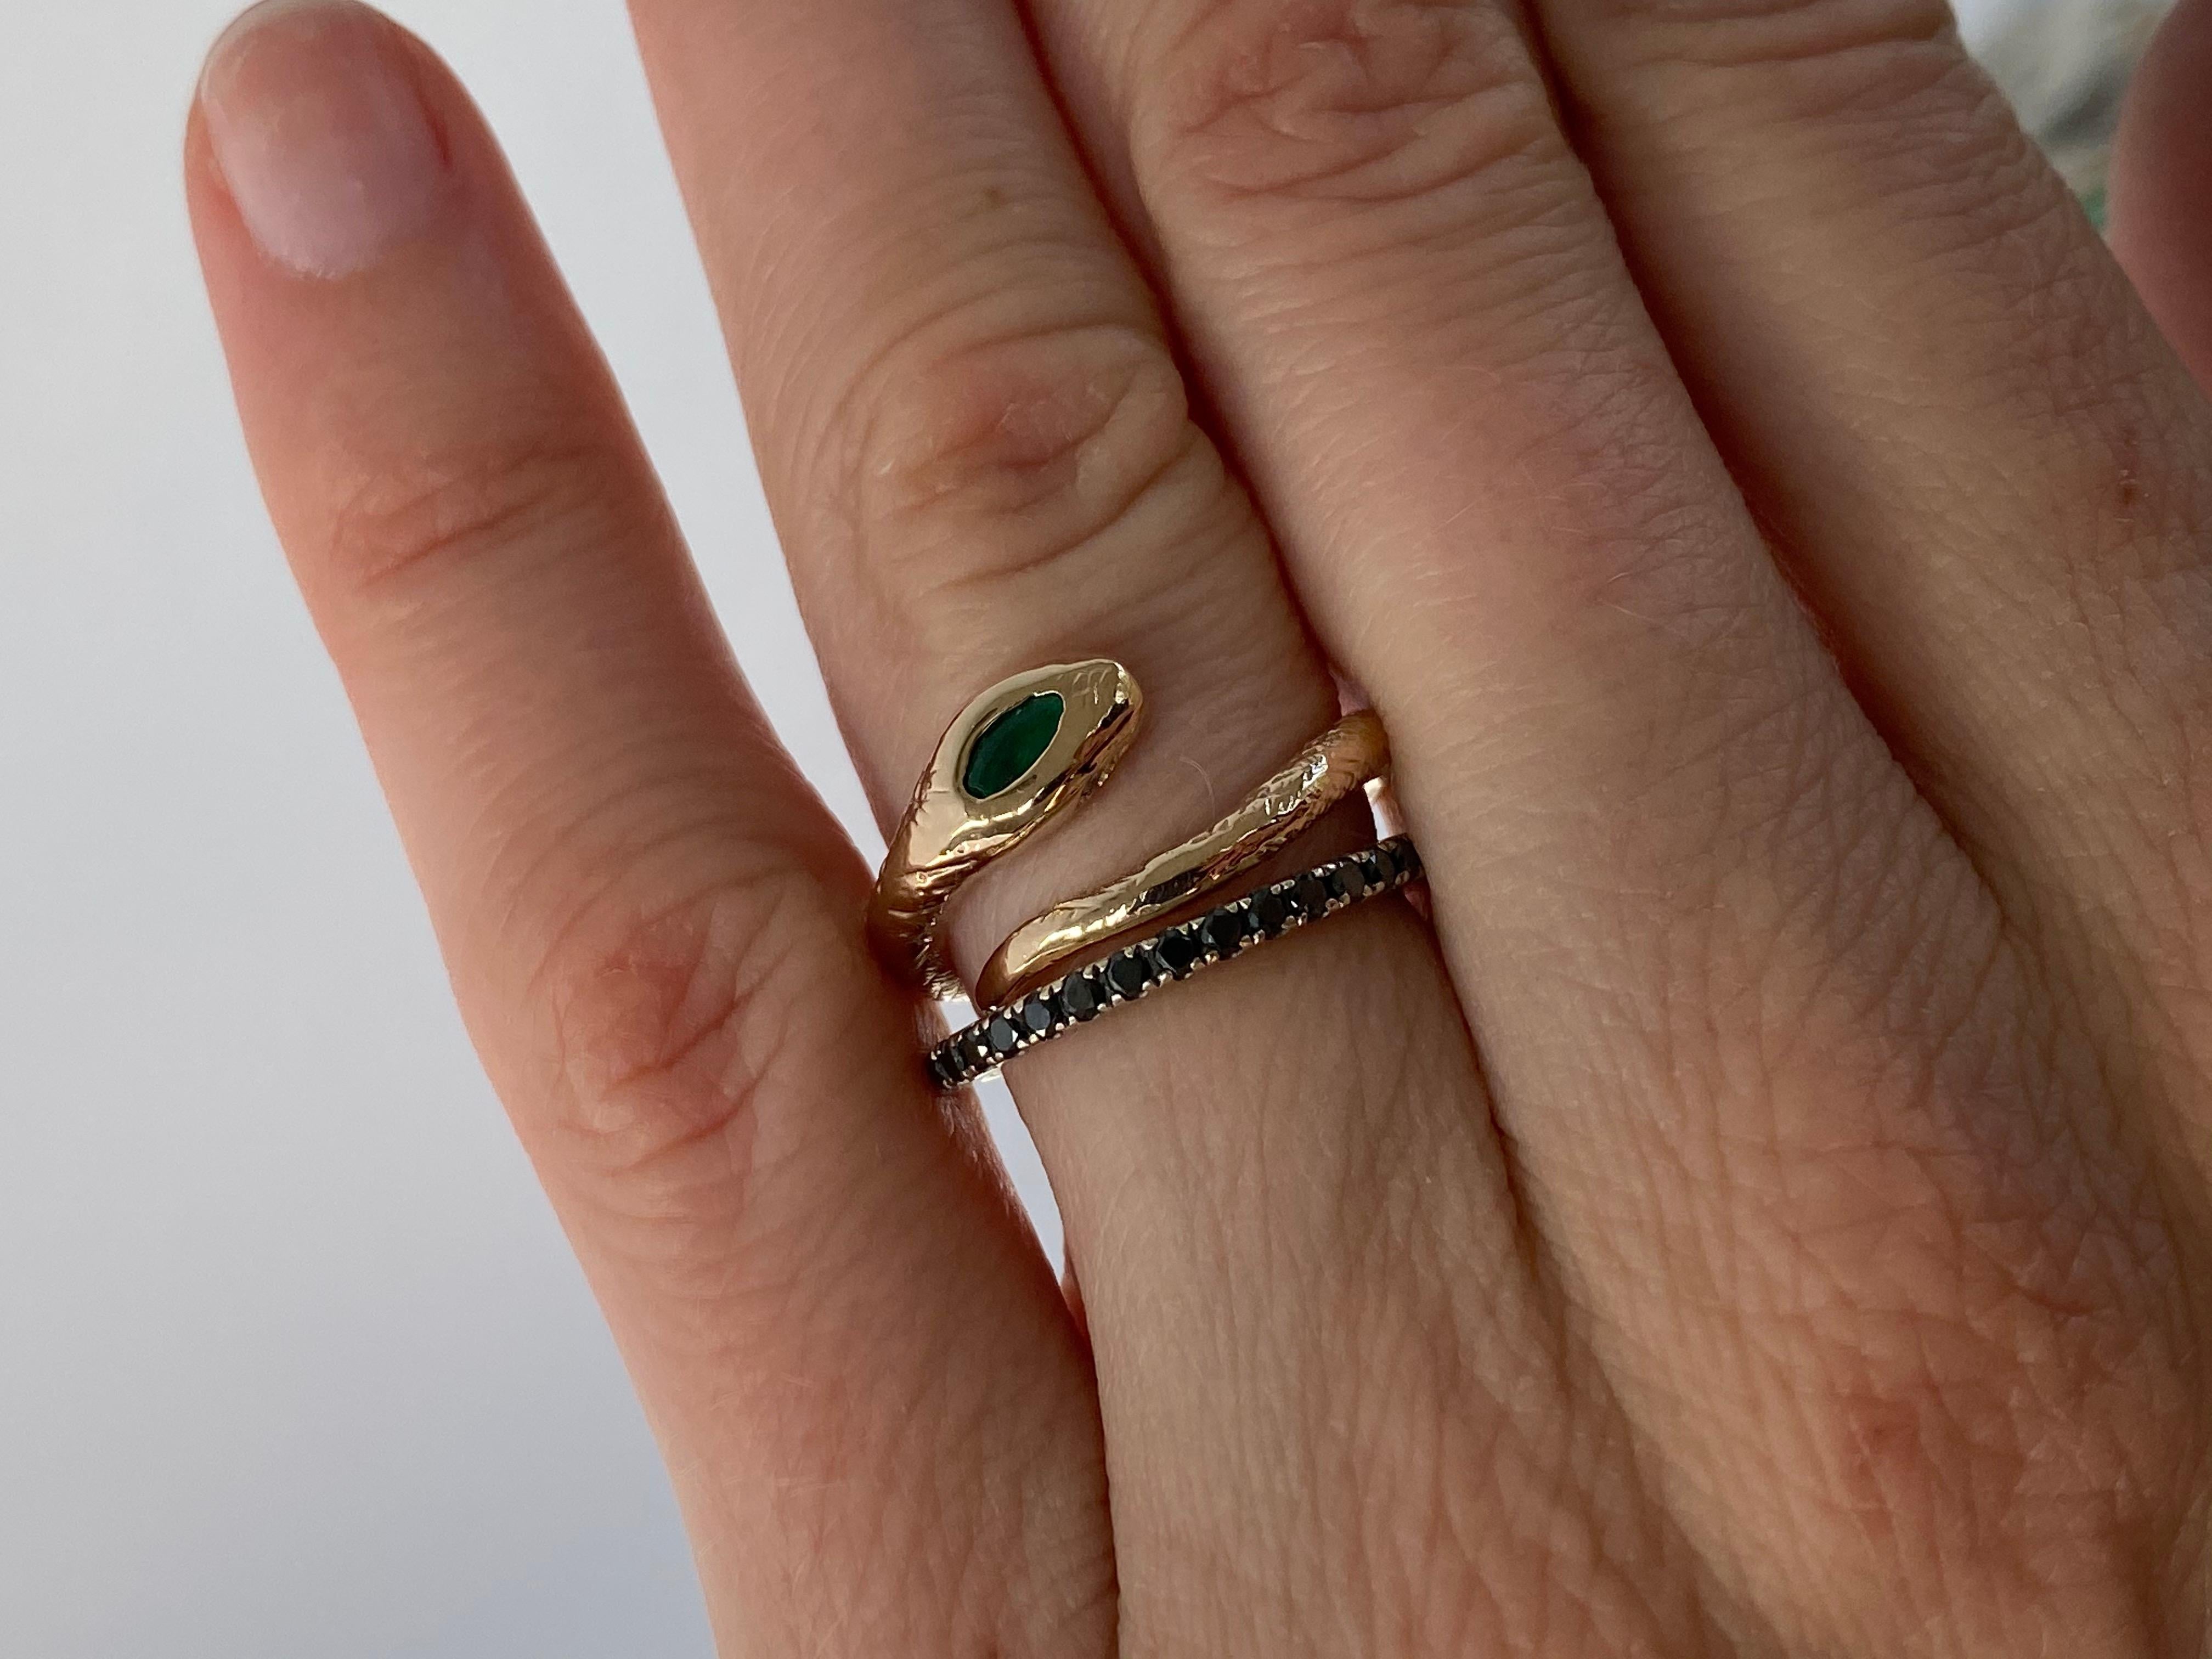 Verstellbarer Smaragd-Schlangenring Gold Rubin viktorianischer Stil J Dauphin

J DAUPHIN 